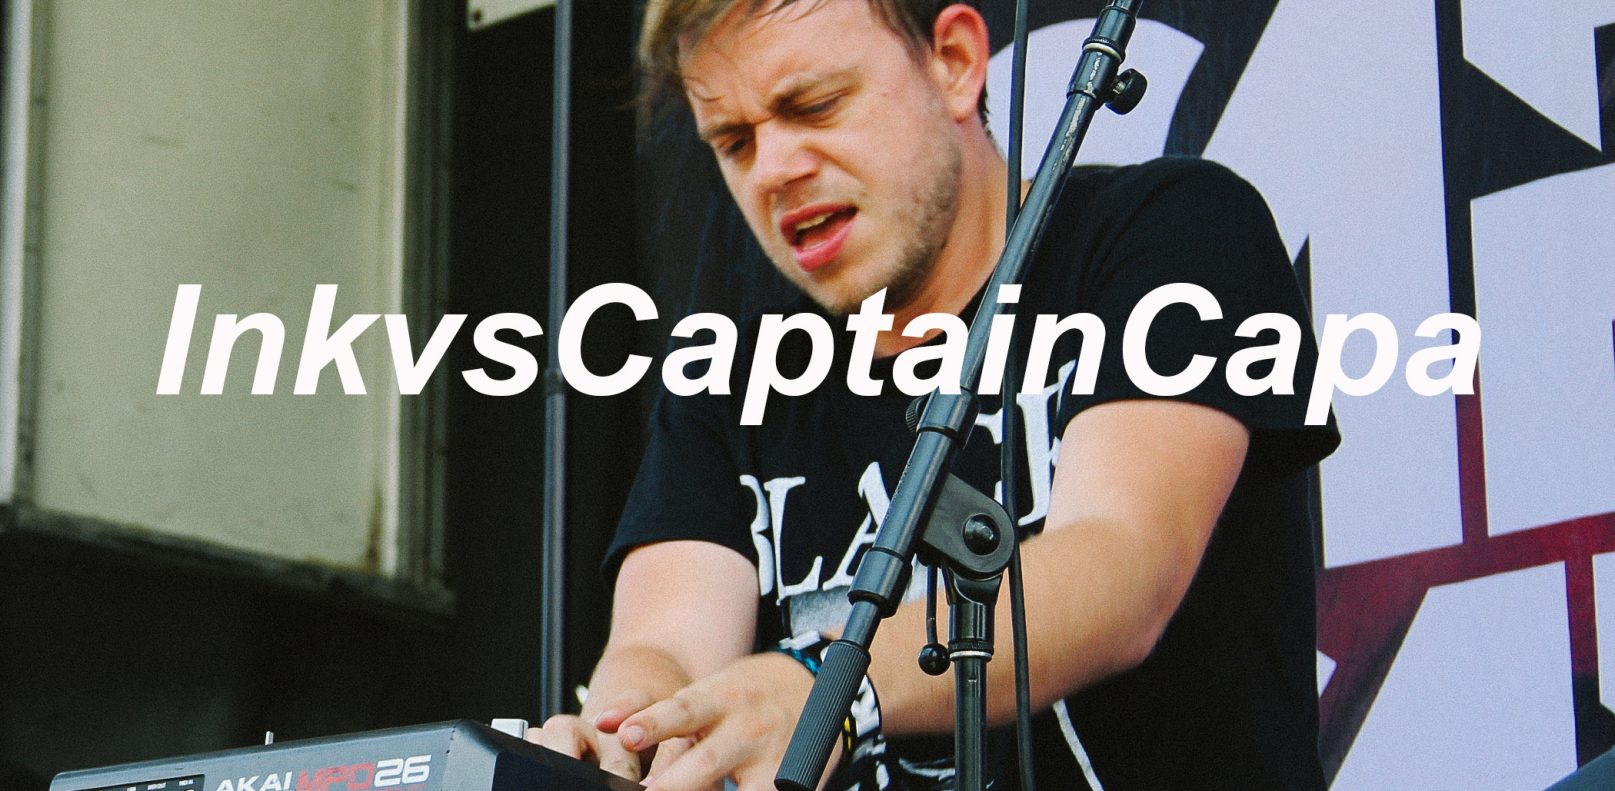 captain capa